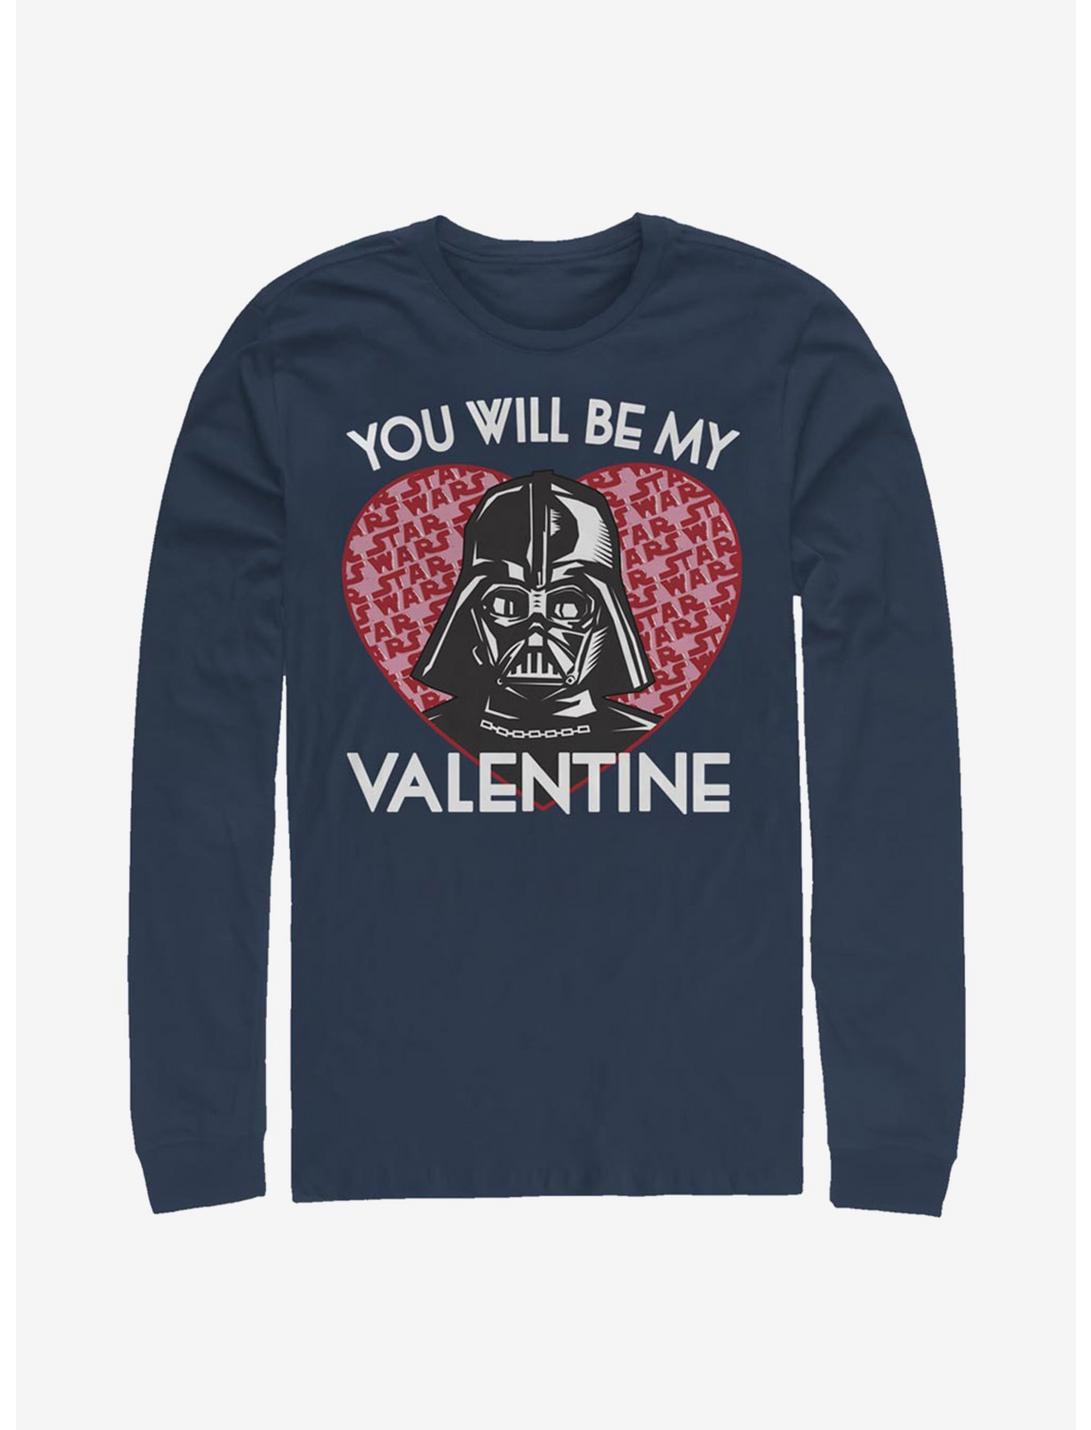 Star Wars Darth Vader Valentine Long-Sleeve T-Shirt, NAVY, hi-res